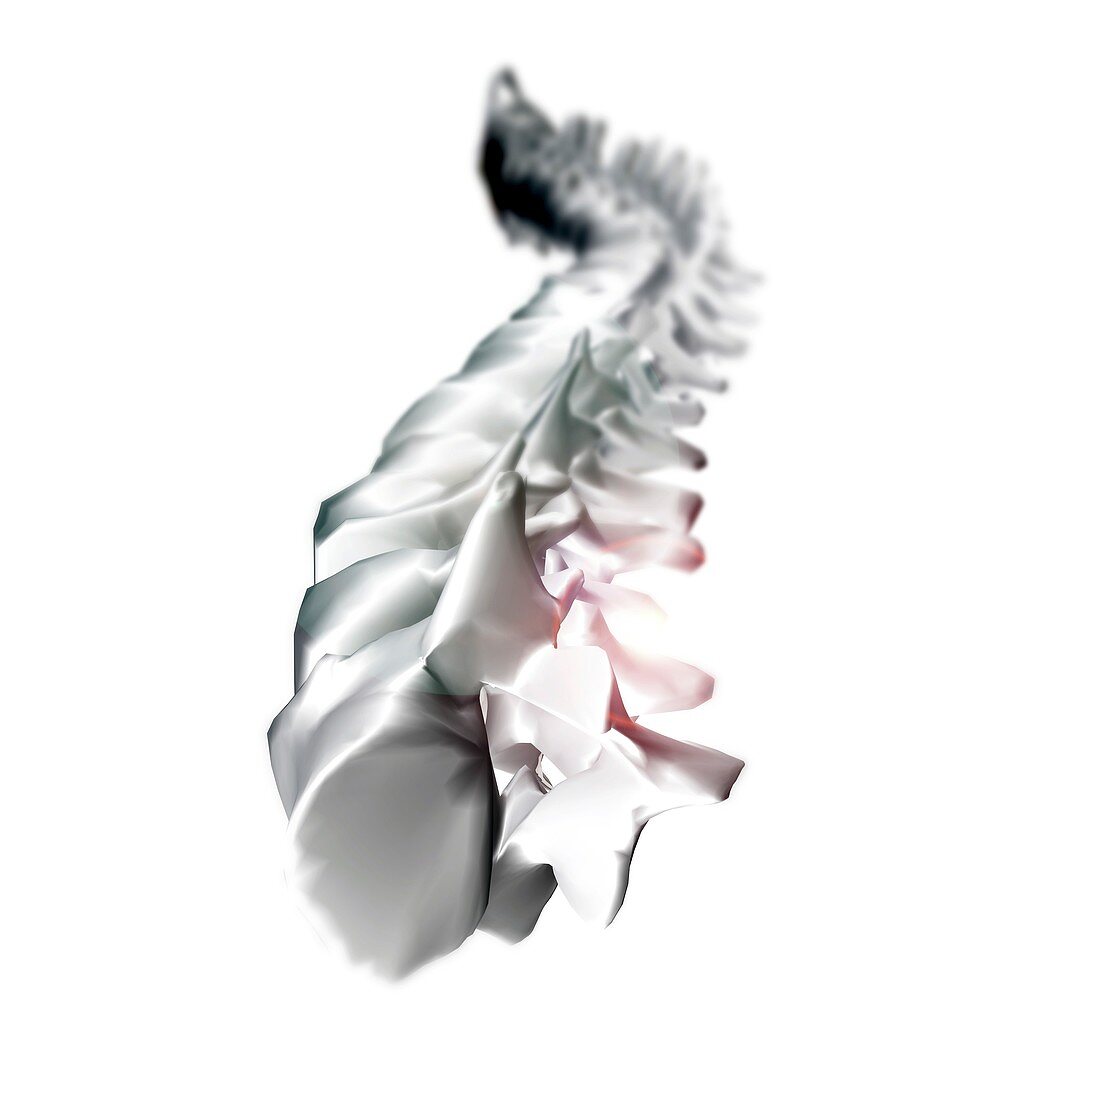 Human backbone,illustration